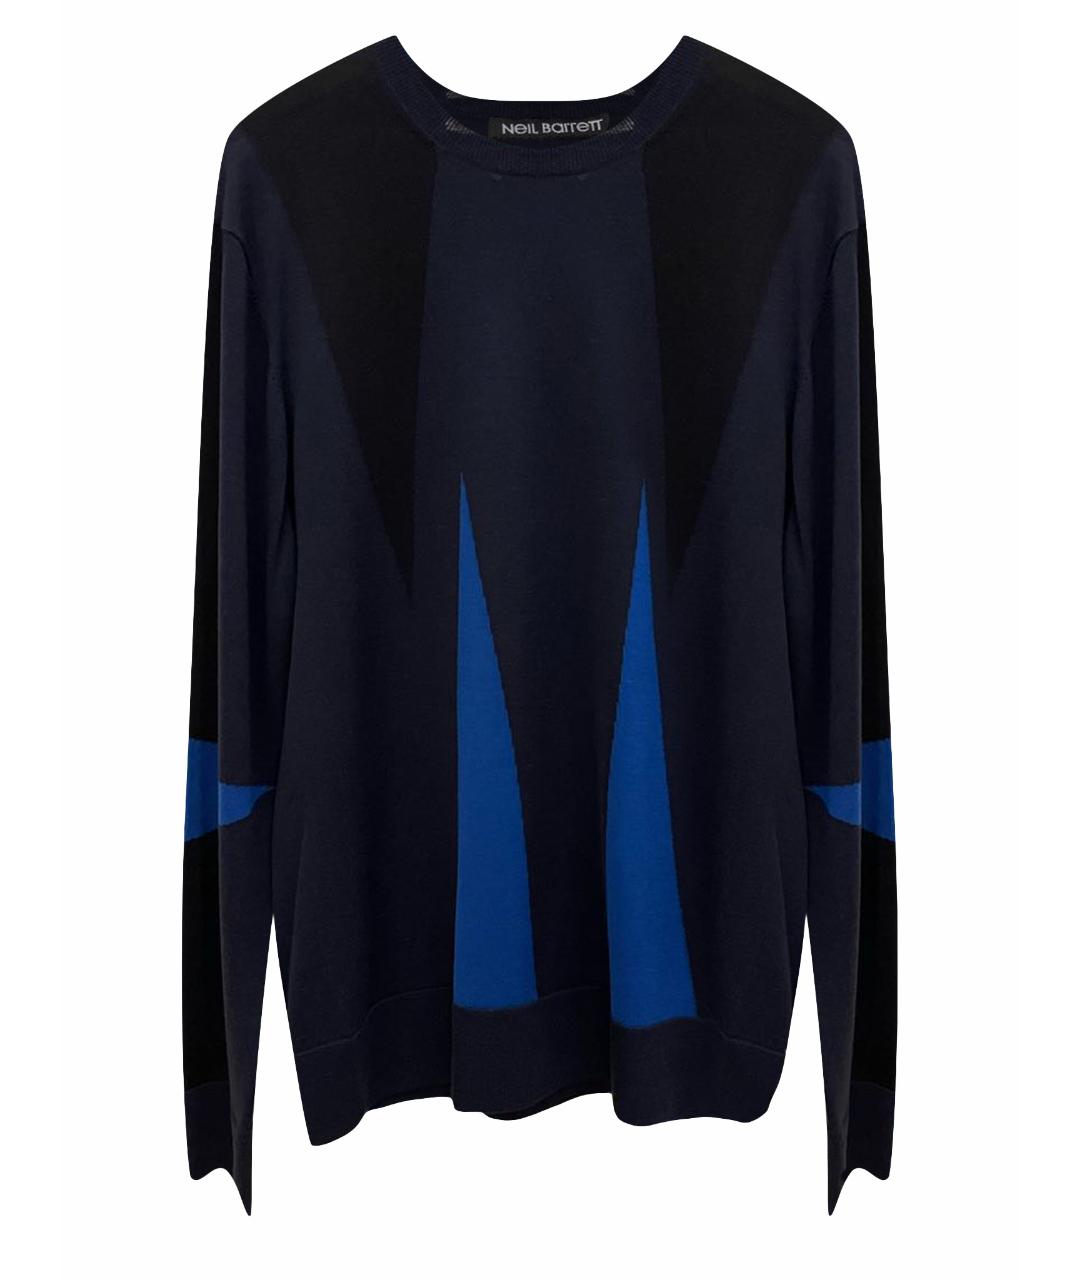 NEIL BARRETT Темно-синий шерстяной джемпер / свитер, фото 1